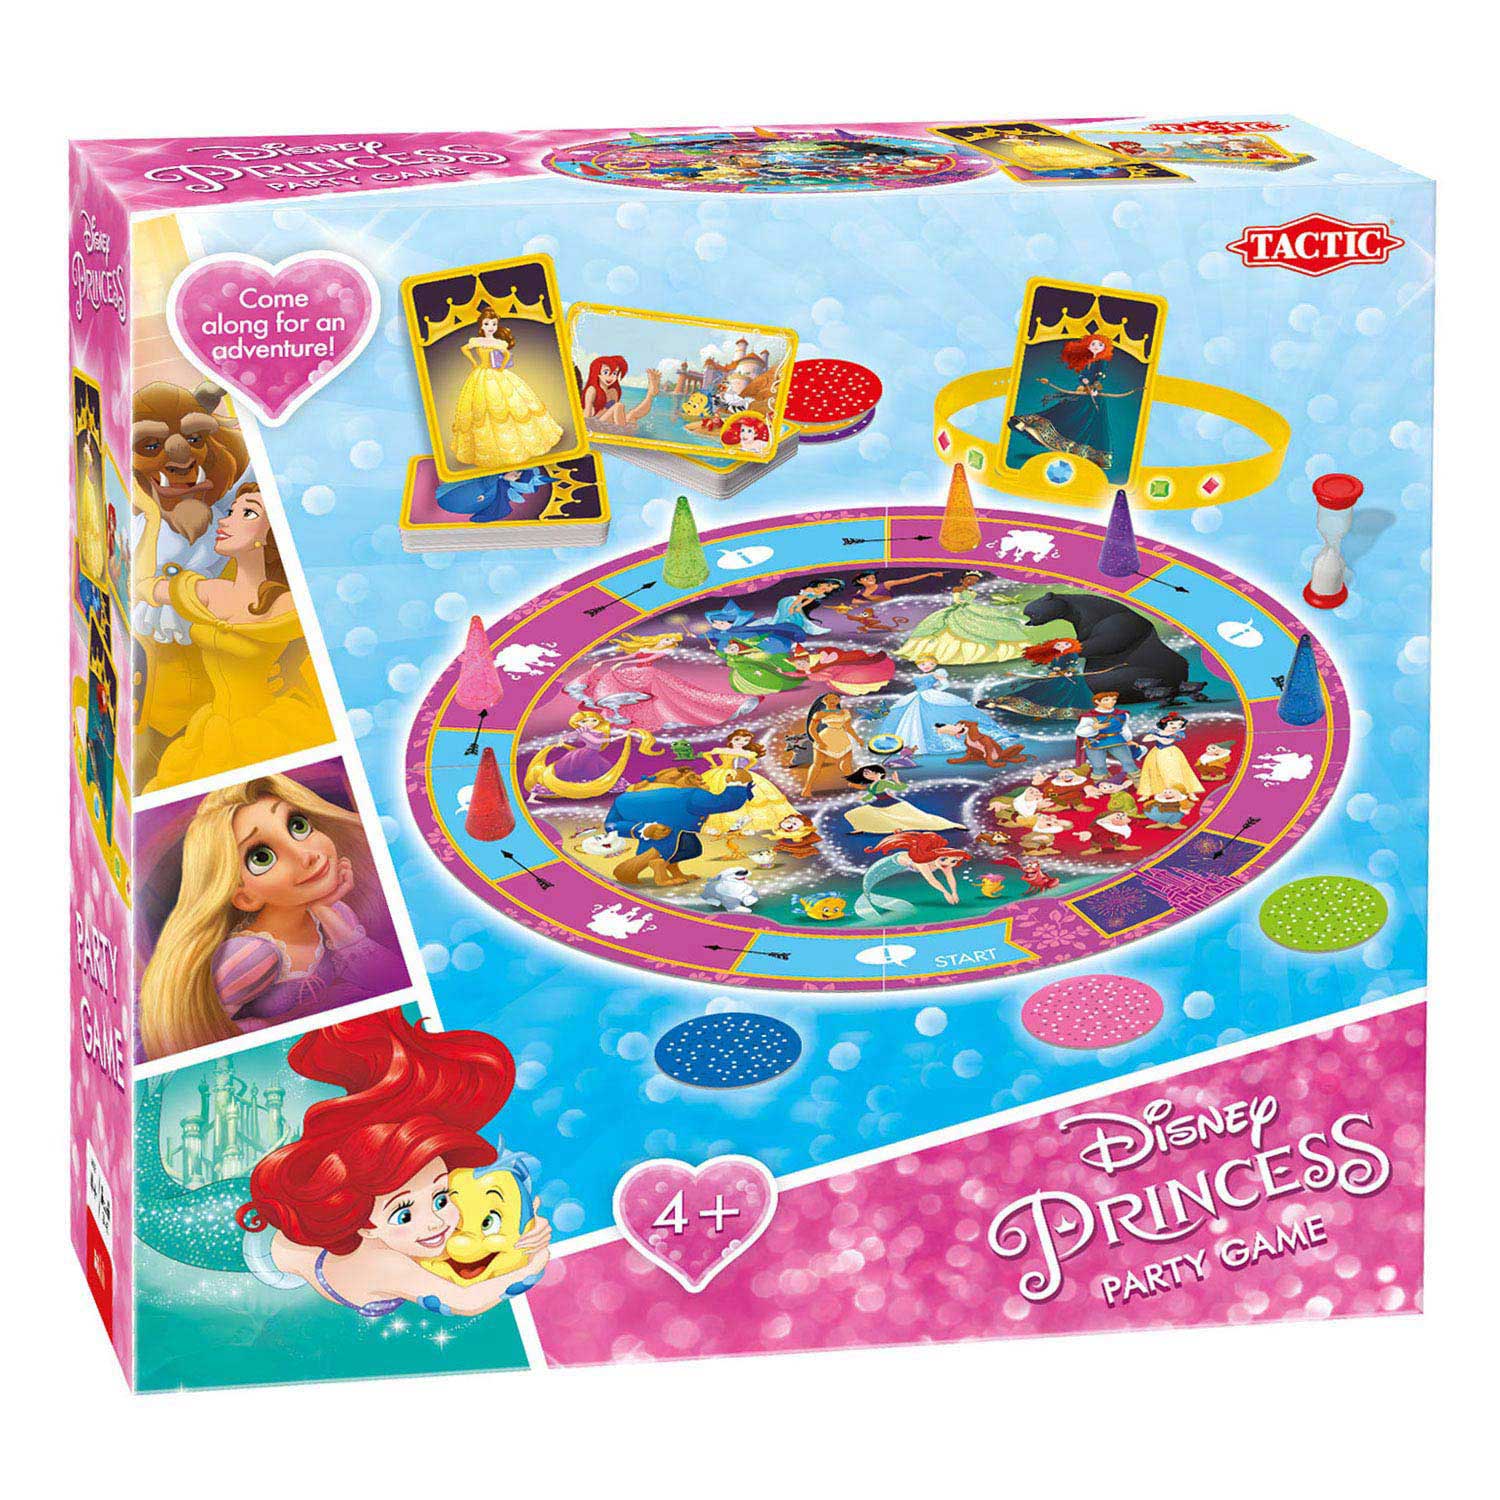 Vleien in beroep gaan Afsnijden Disney Princess Party Game | Thimble Toys